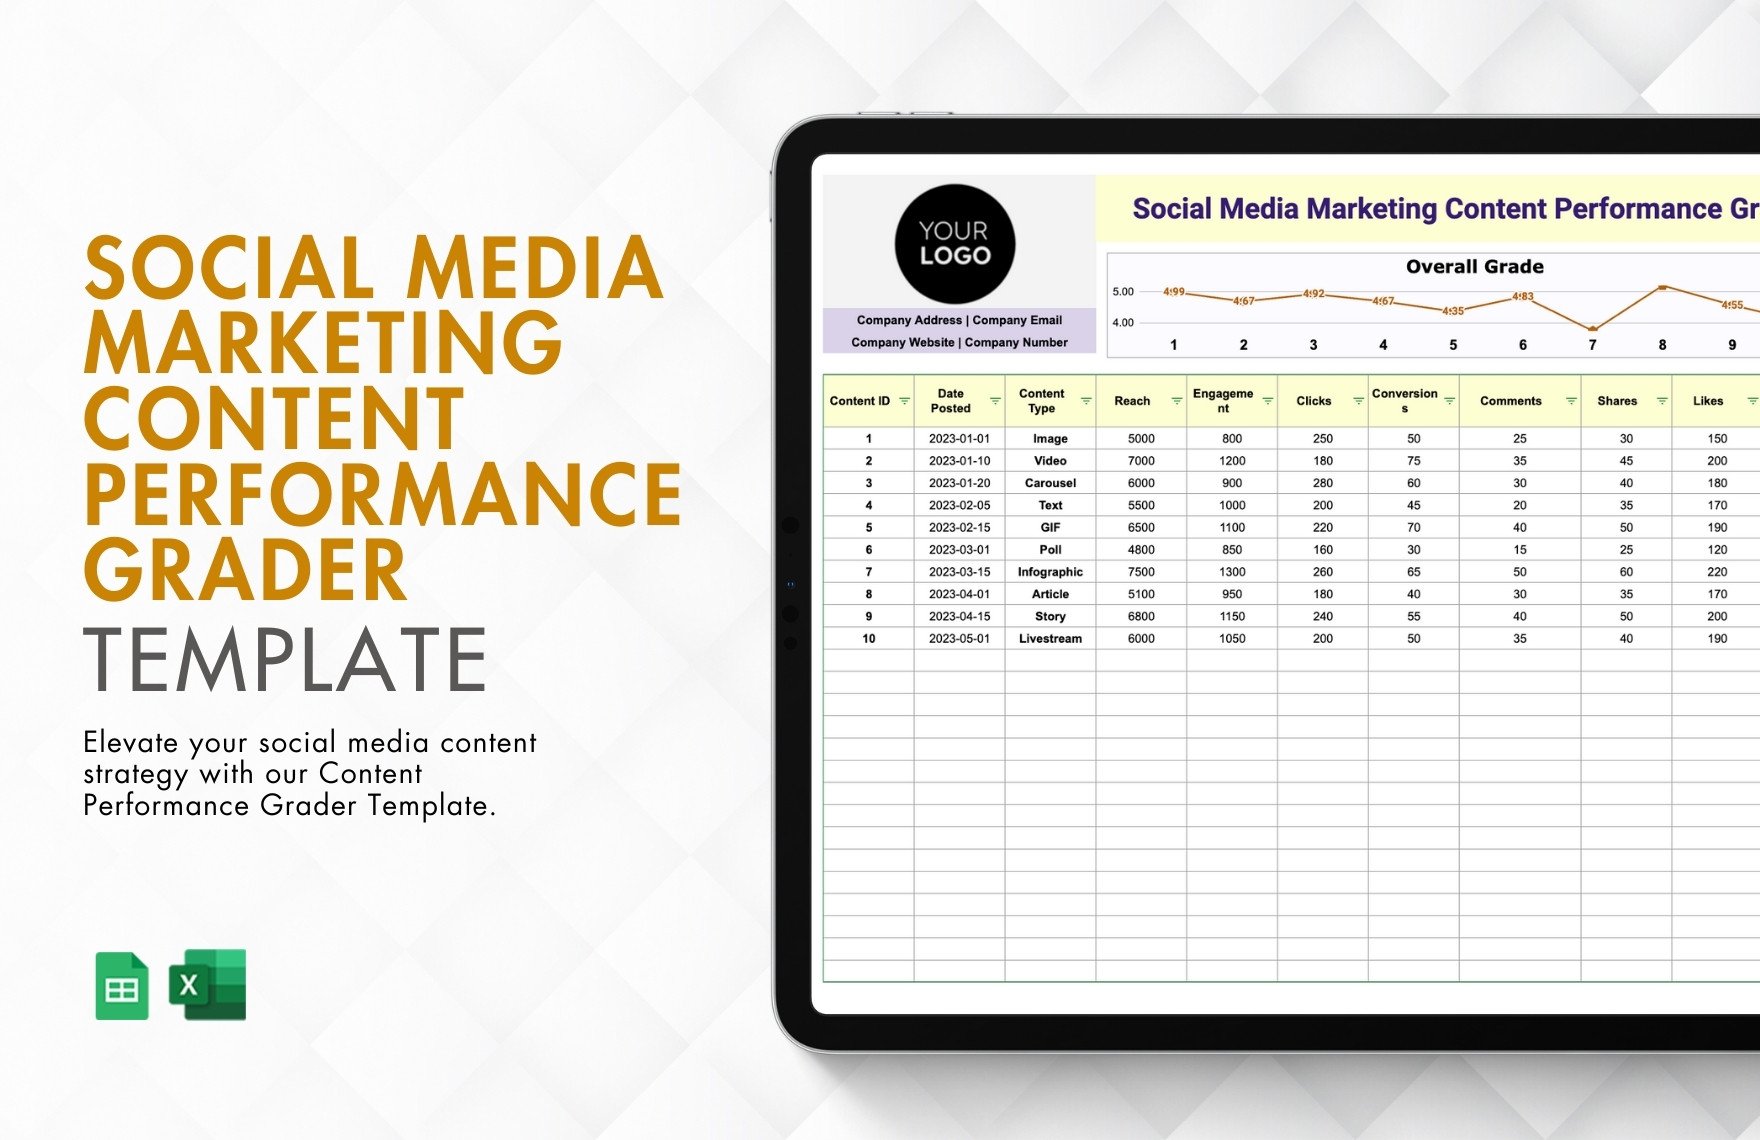 Social Media Marketing Content Performance Grader Template